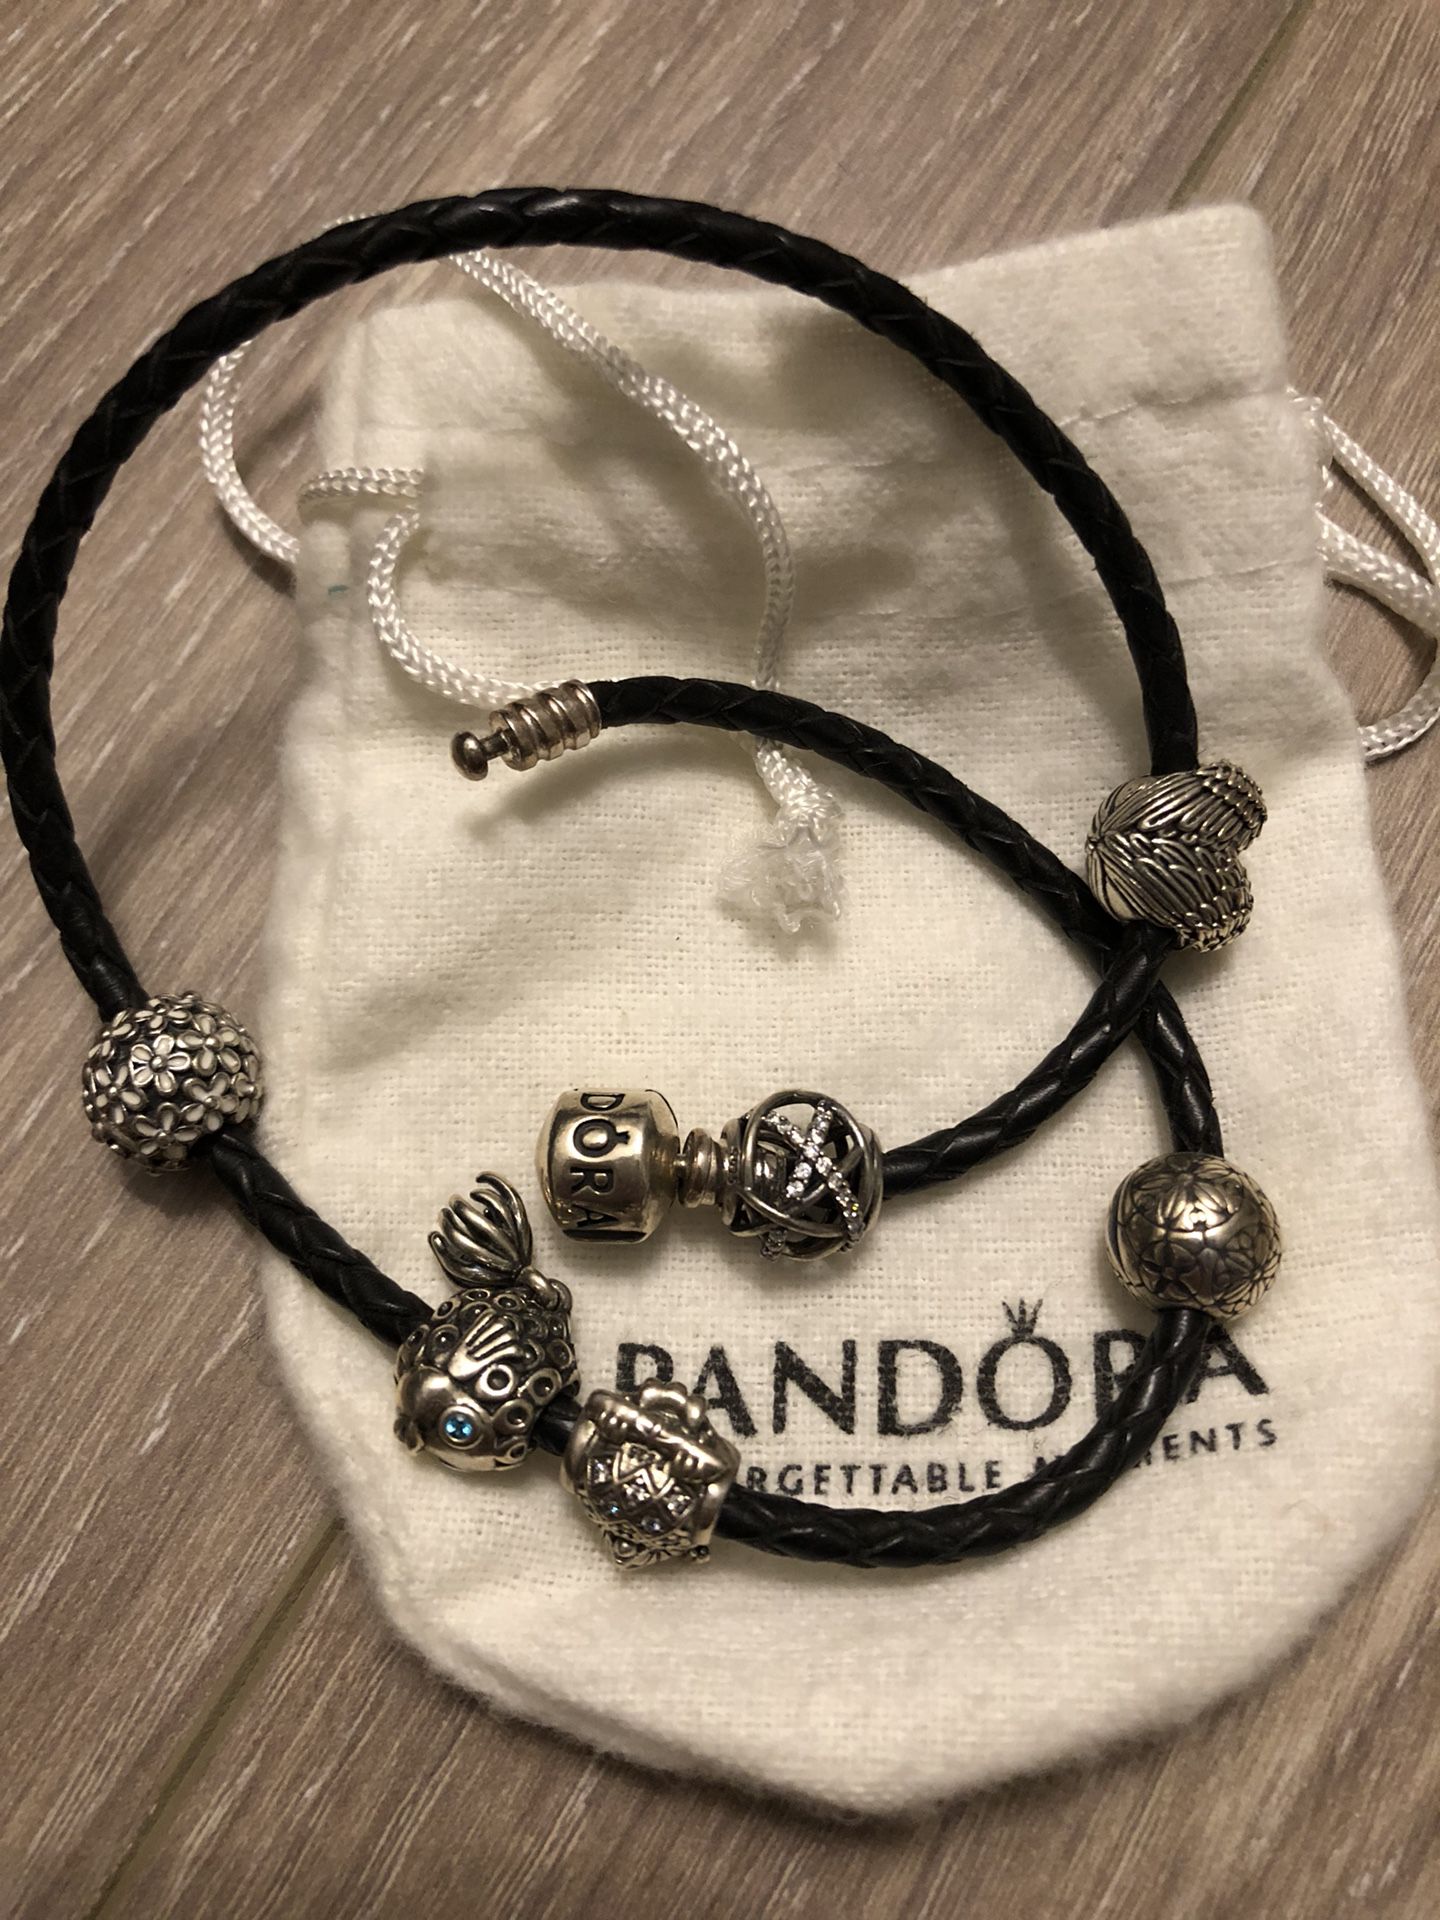 Pandora bracelet and charms (a set)